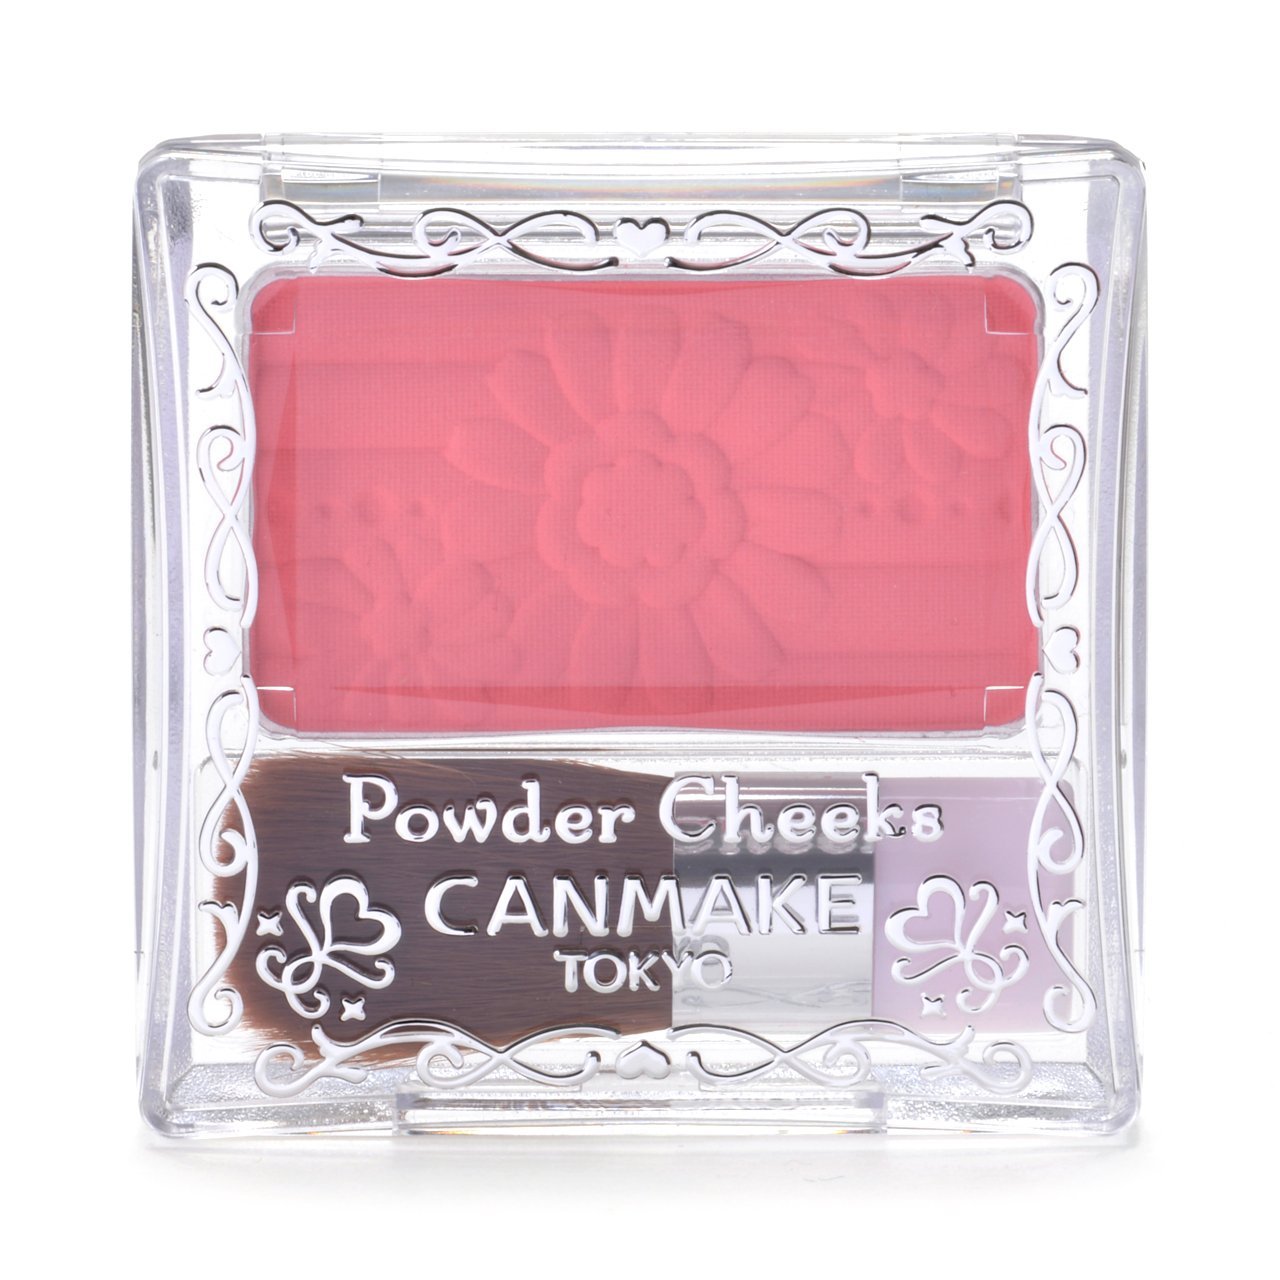 Canmake Sweet Coral Powder Cheeks PW28 Long - lasting 4.4G Blush